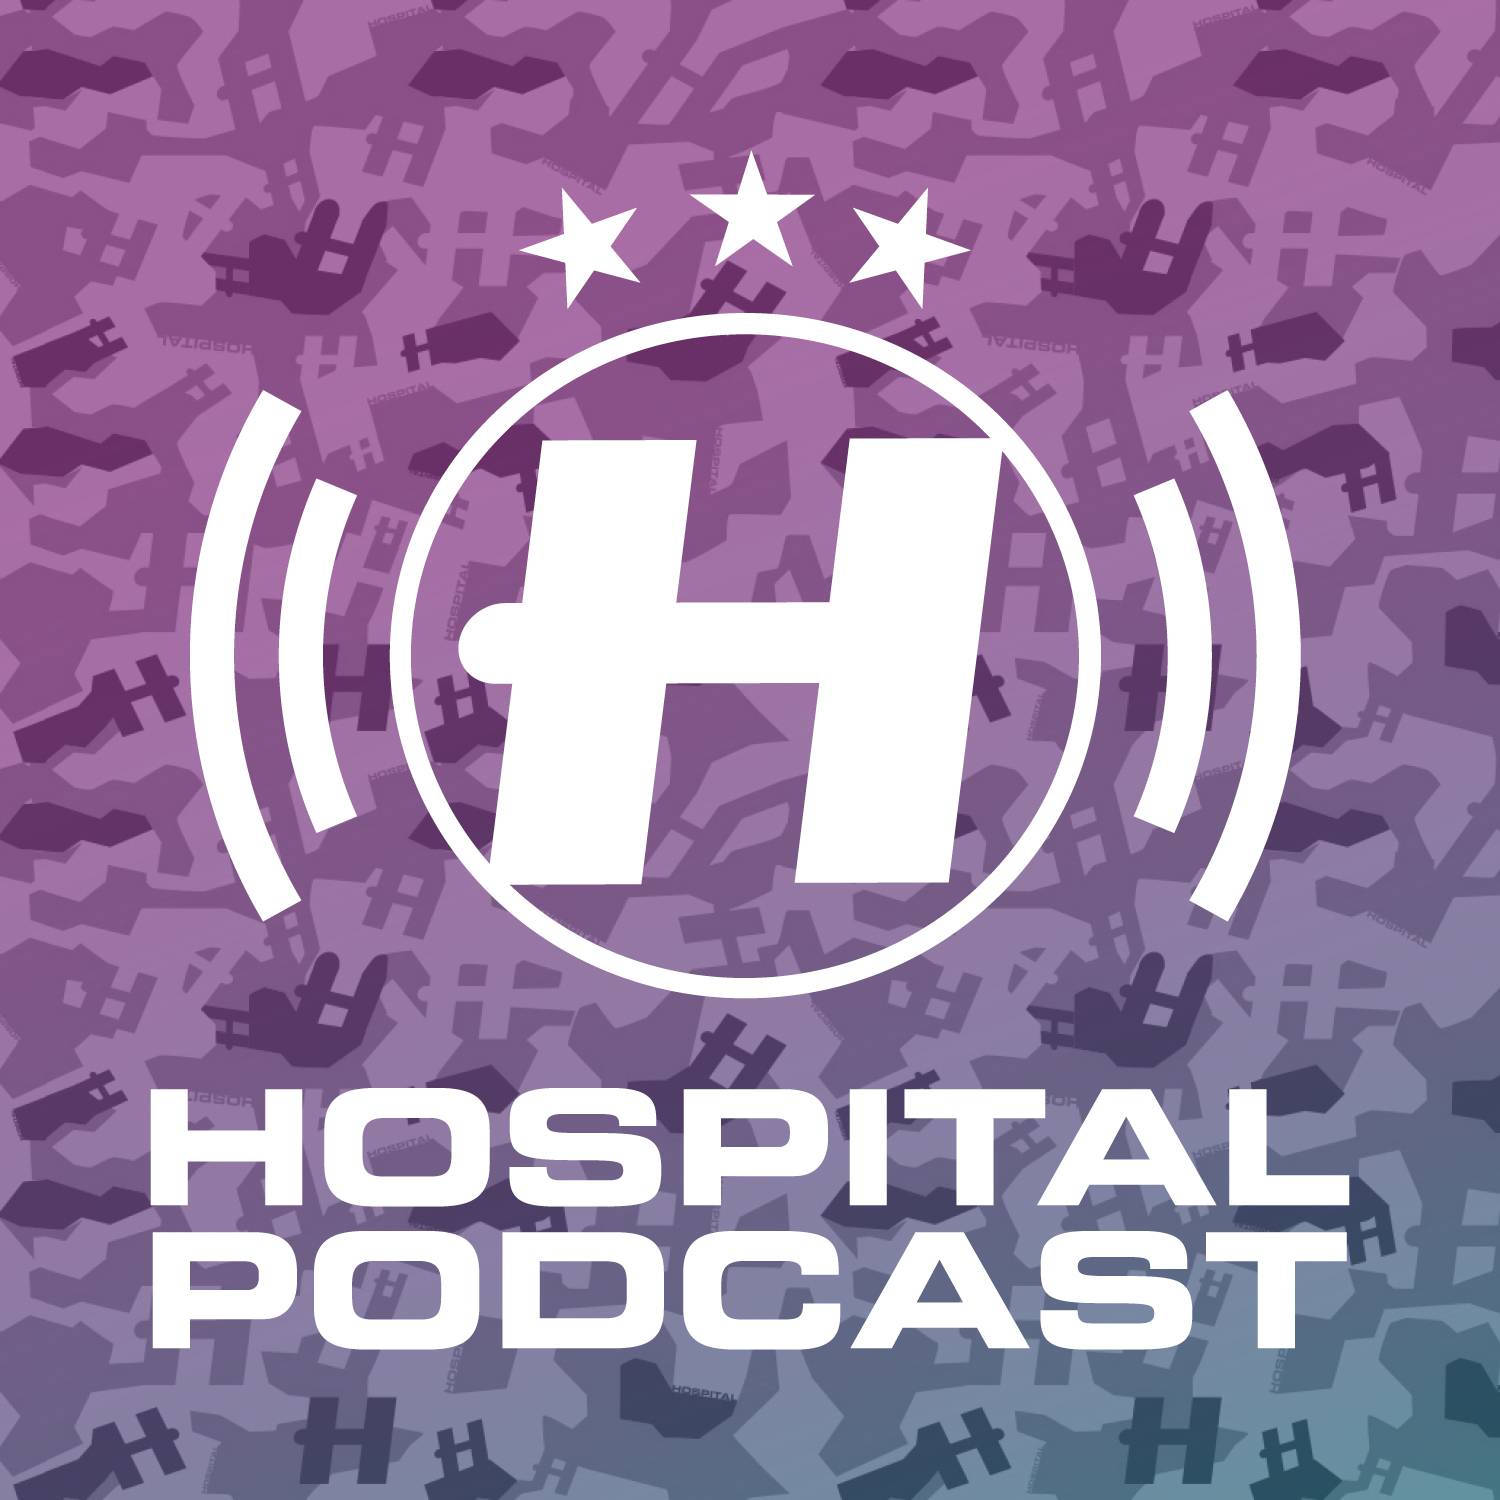 Hospital Podcast 381 with London Elektricity Artwork